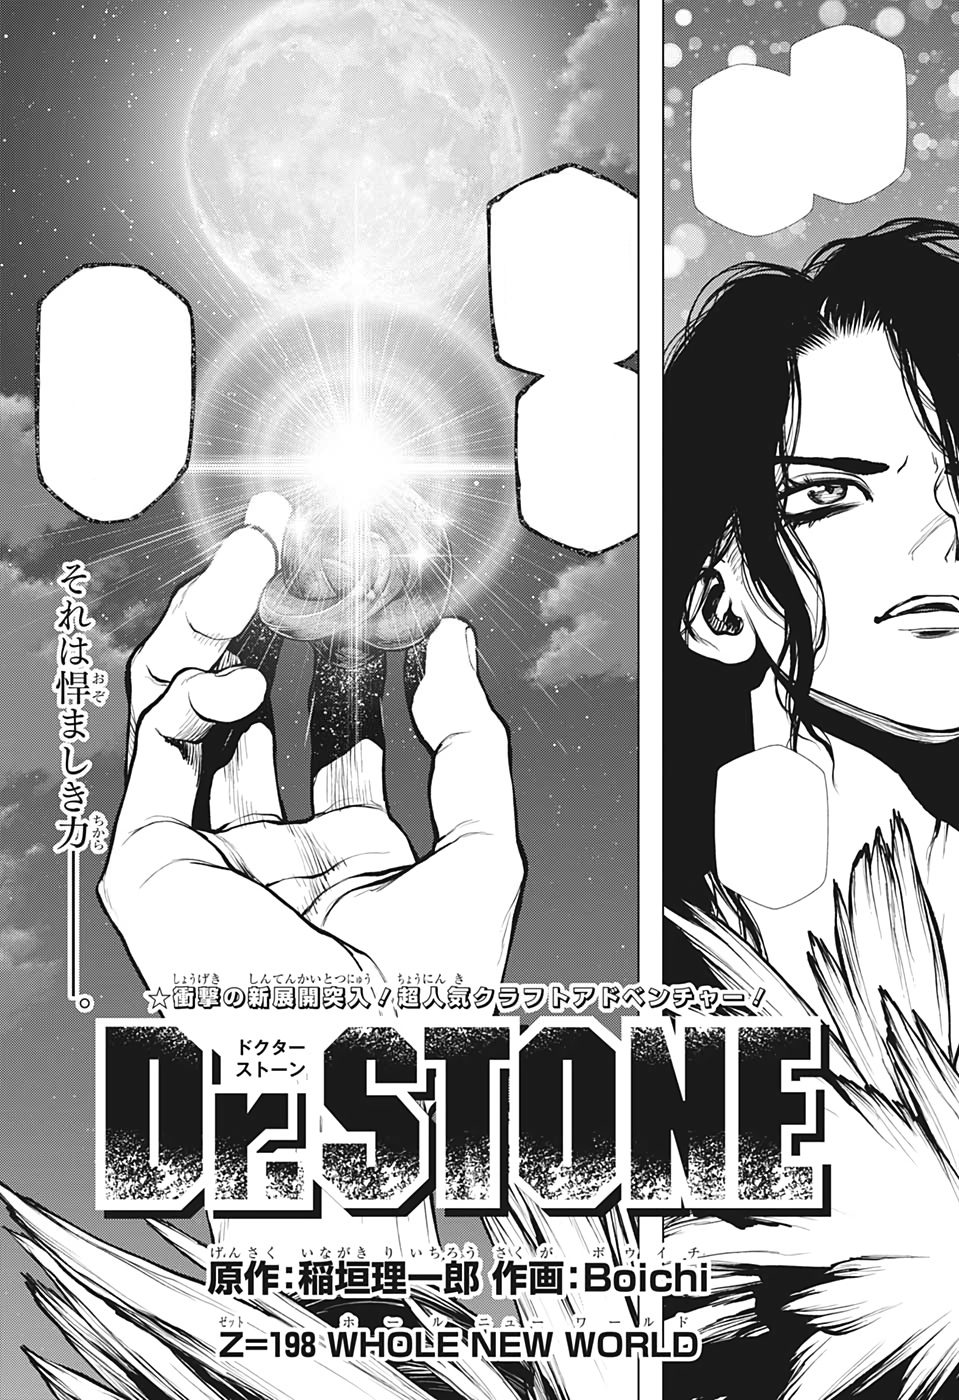 Chapter 198 Dr Stone Wiki Fandom